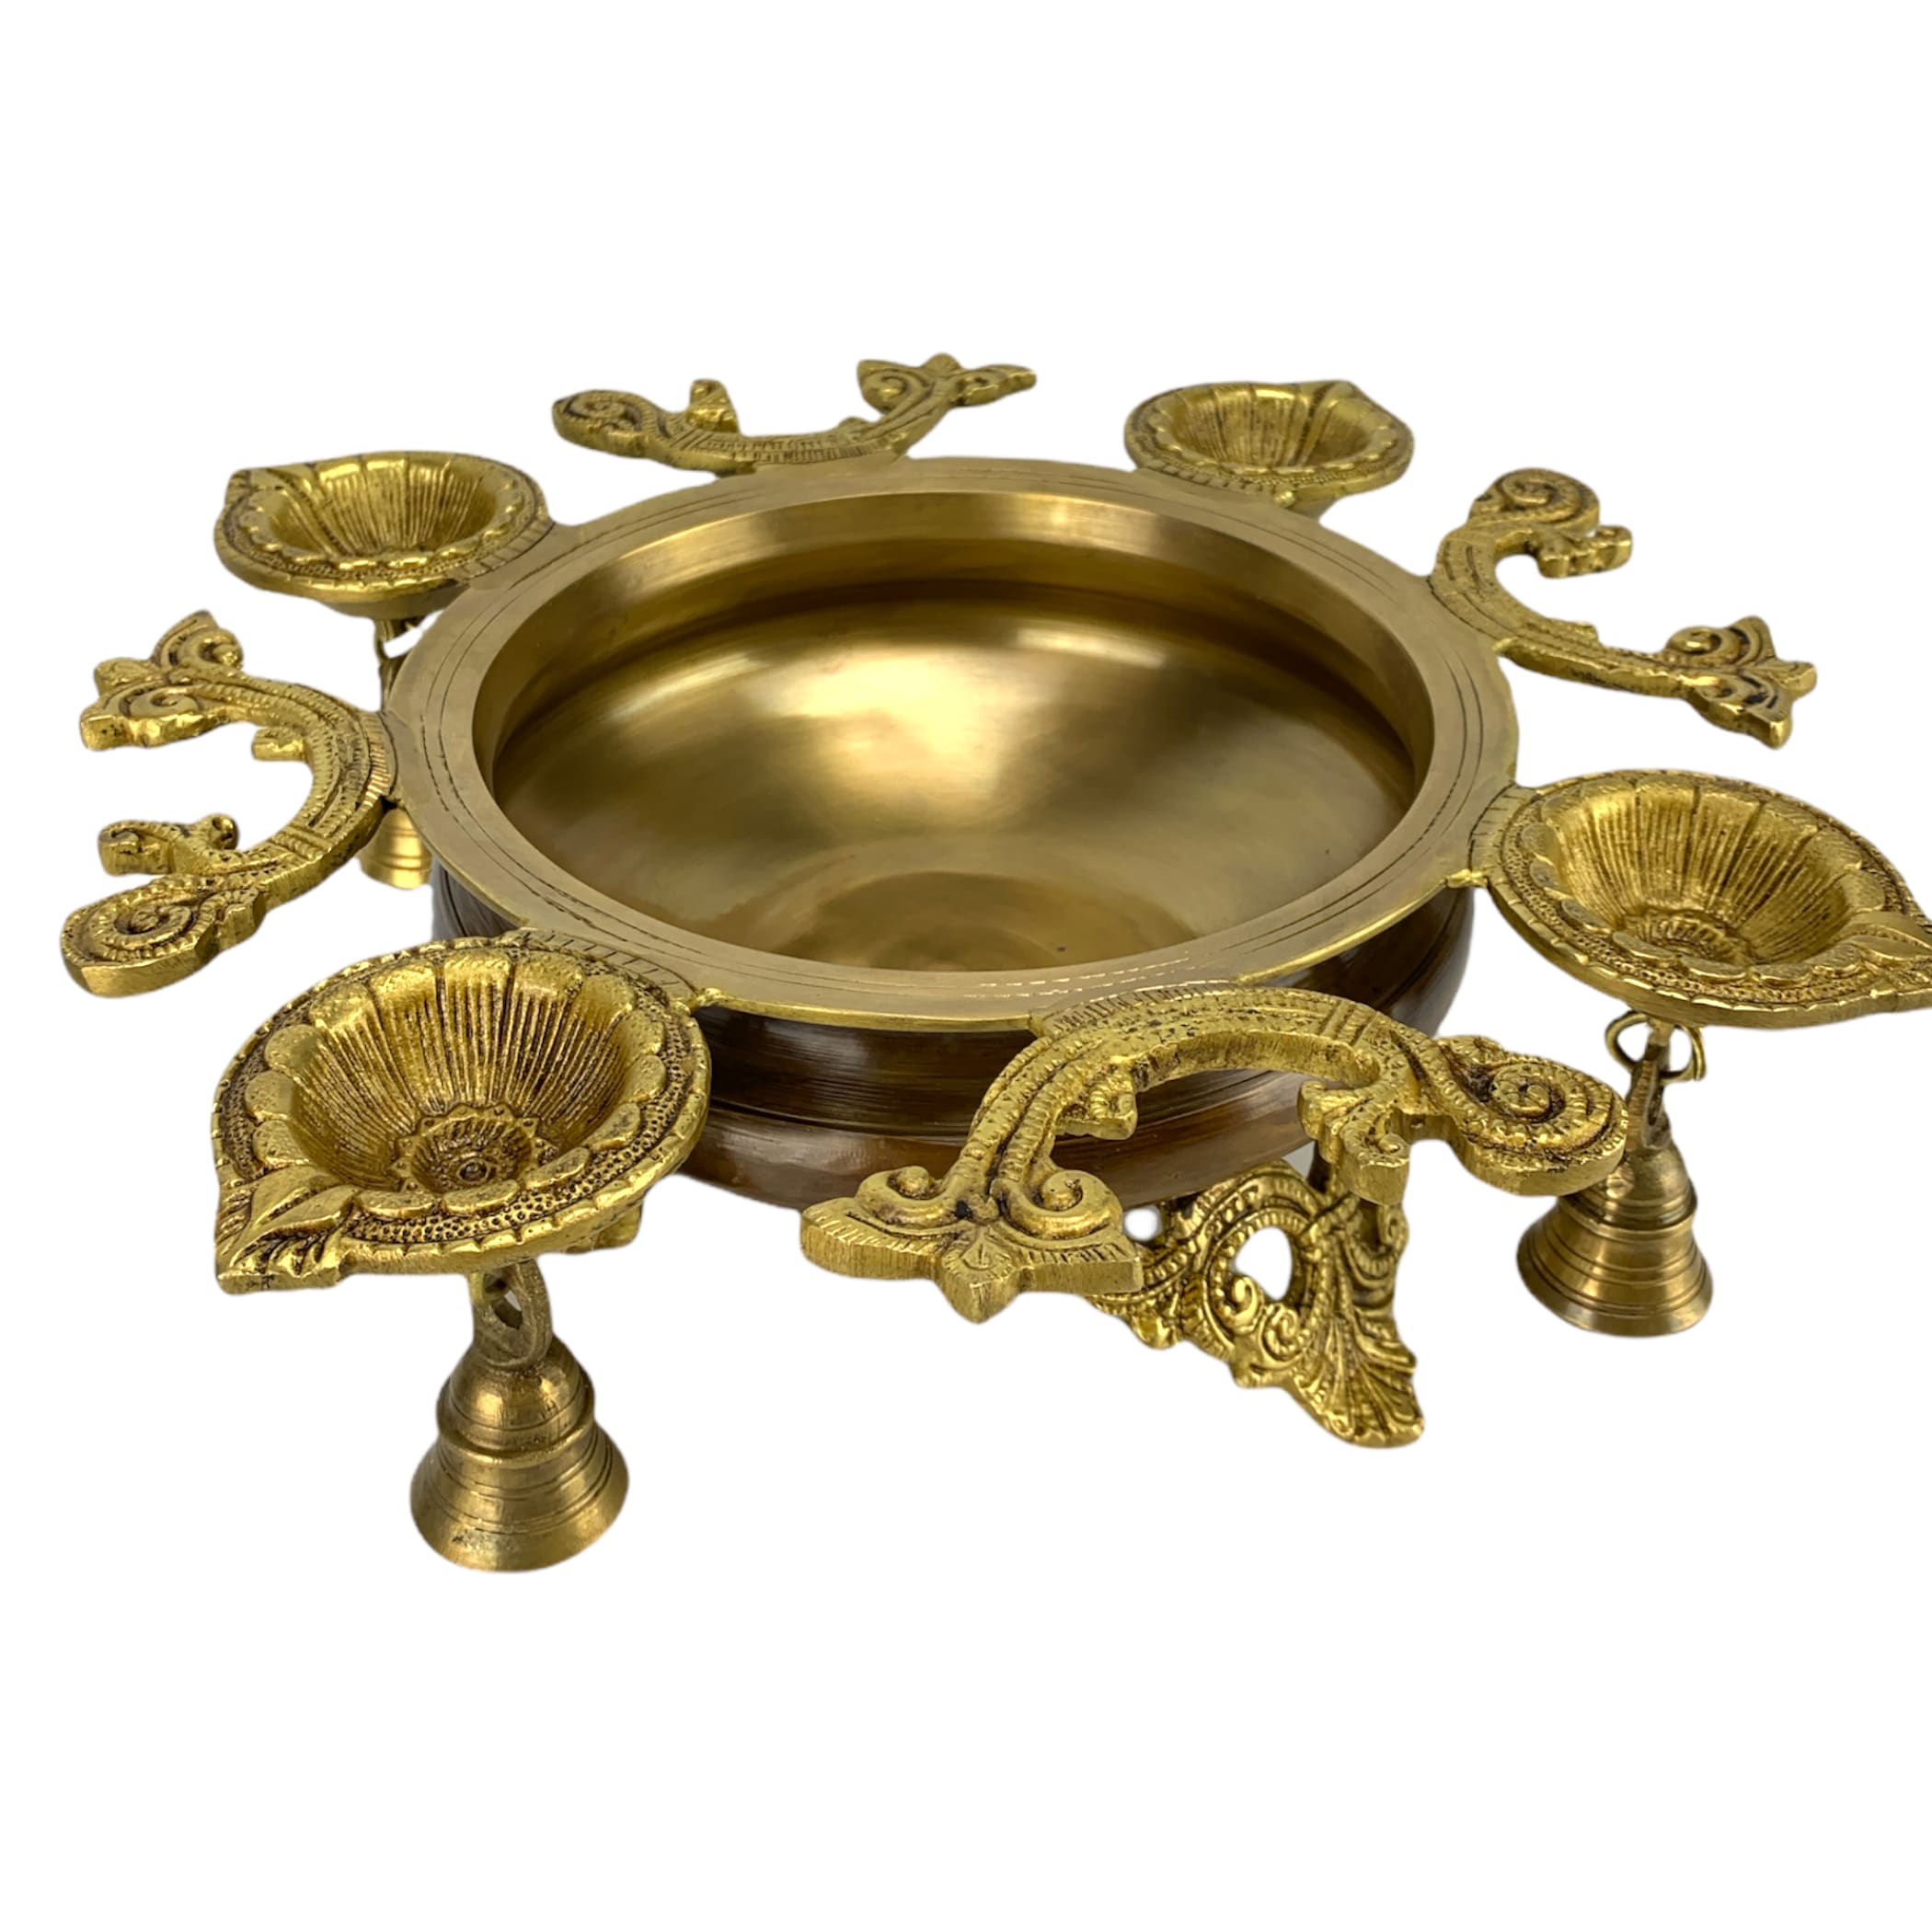 Large brass deepak urli with bell centre table decor statue